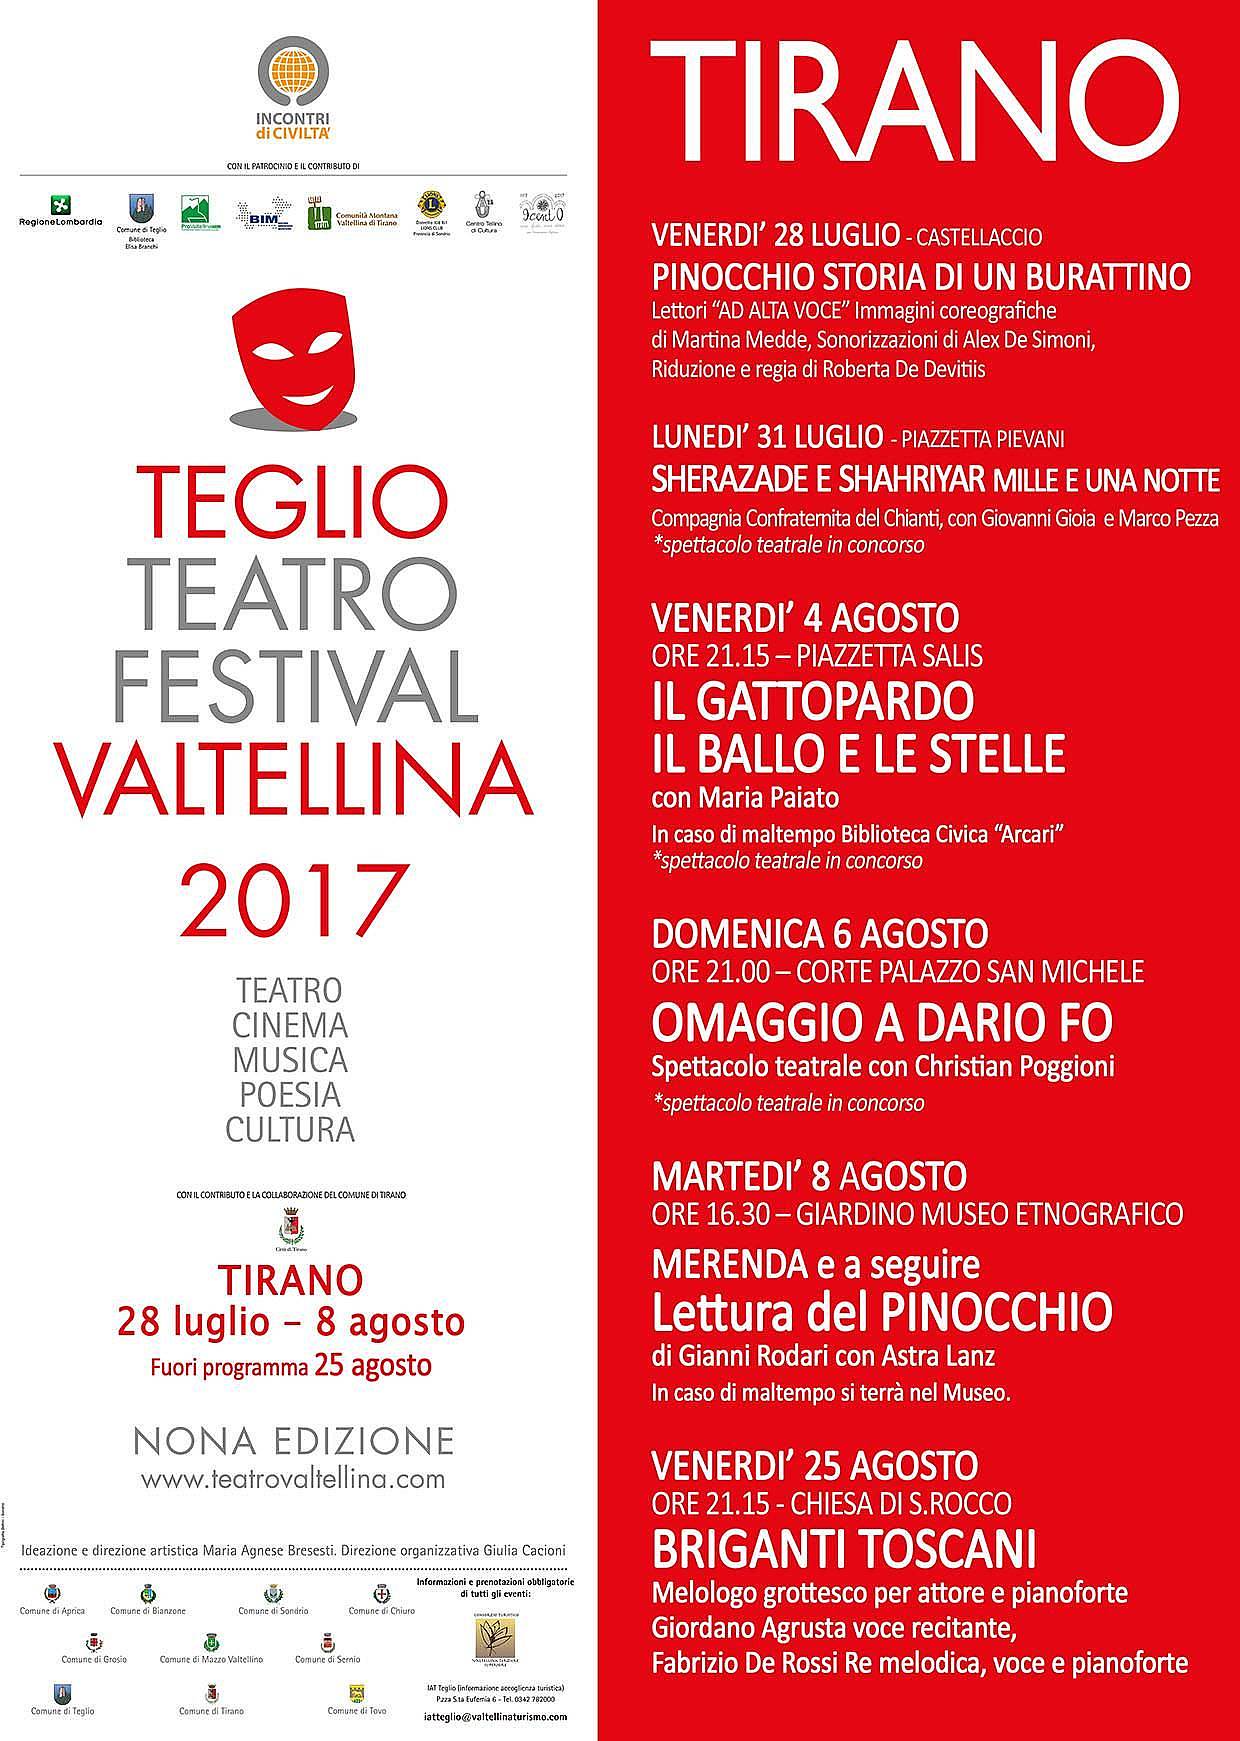 Teglio Teatro Festival Valtellina 2017